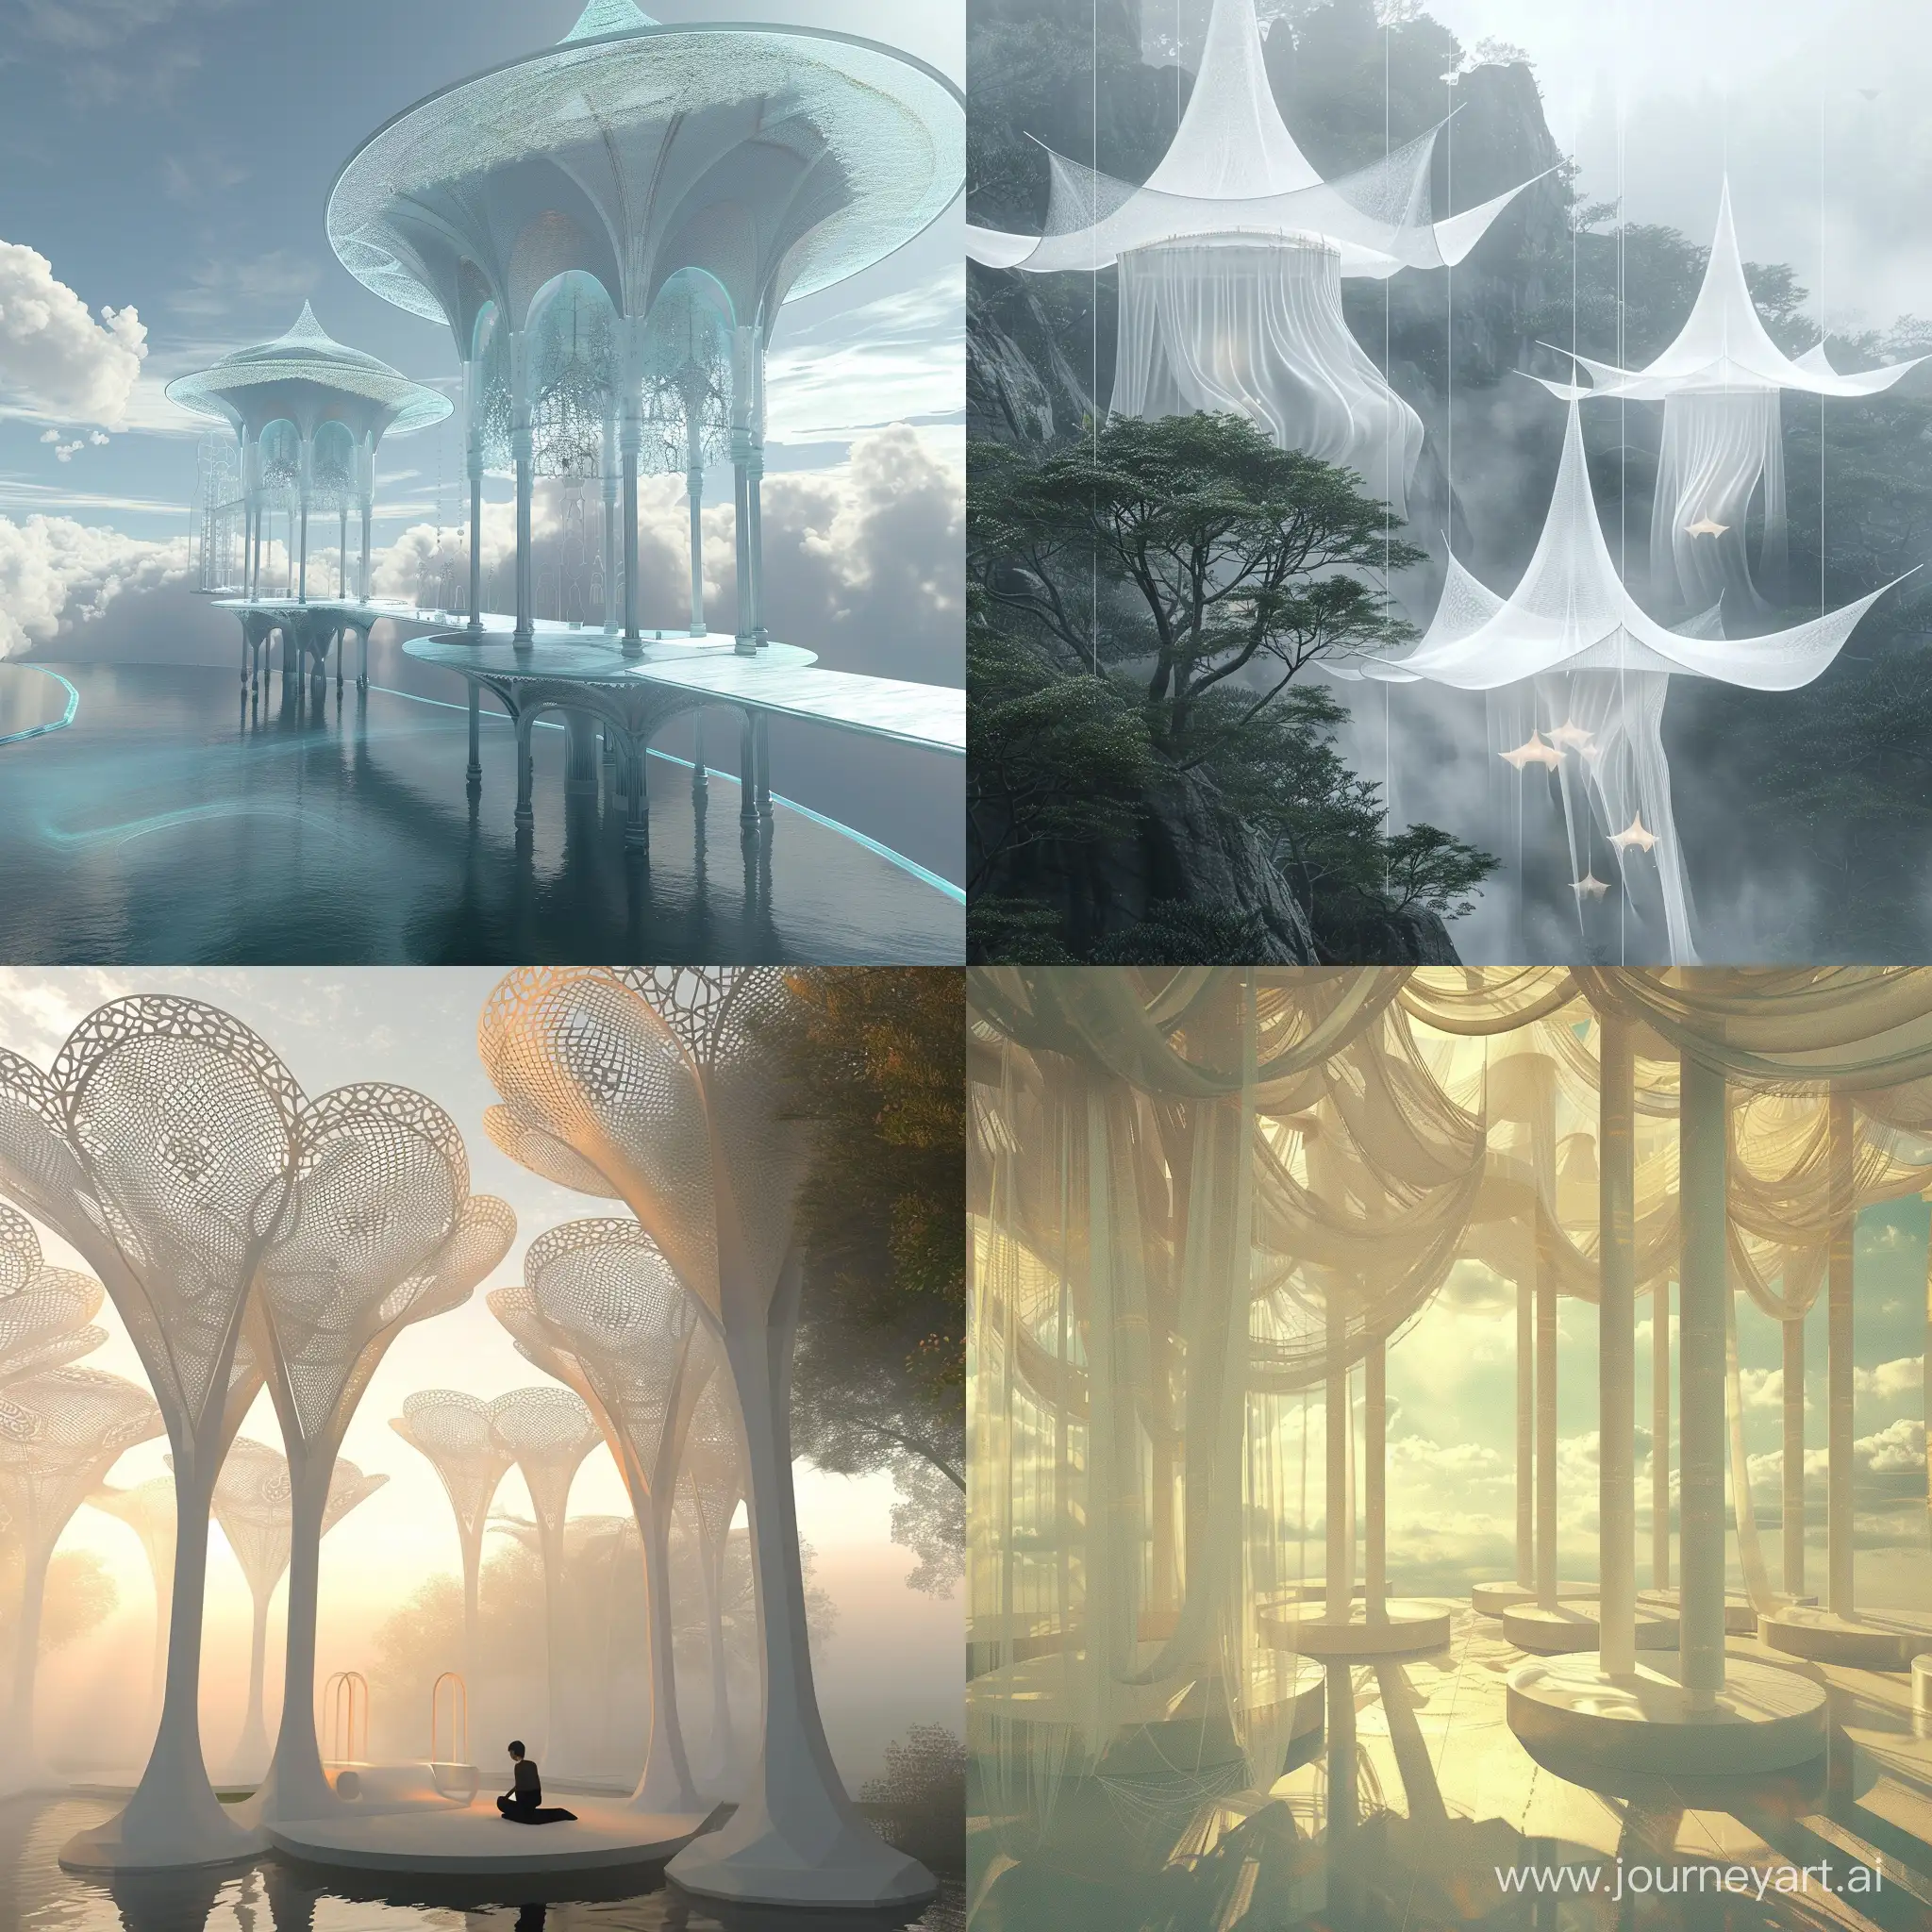 Ethereal-Pavilions-Transcendent-and-Elegant-Structures